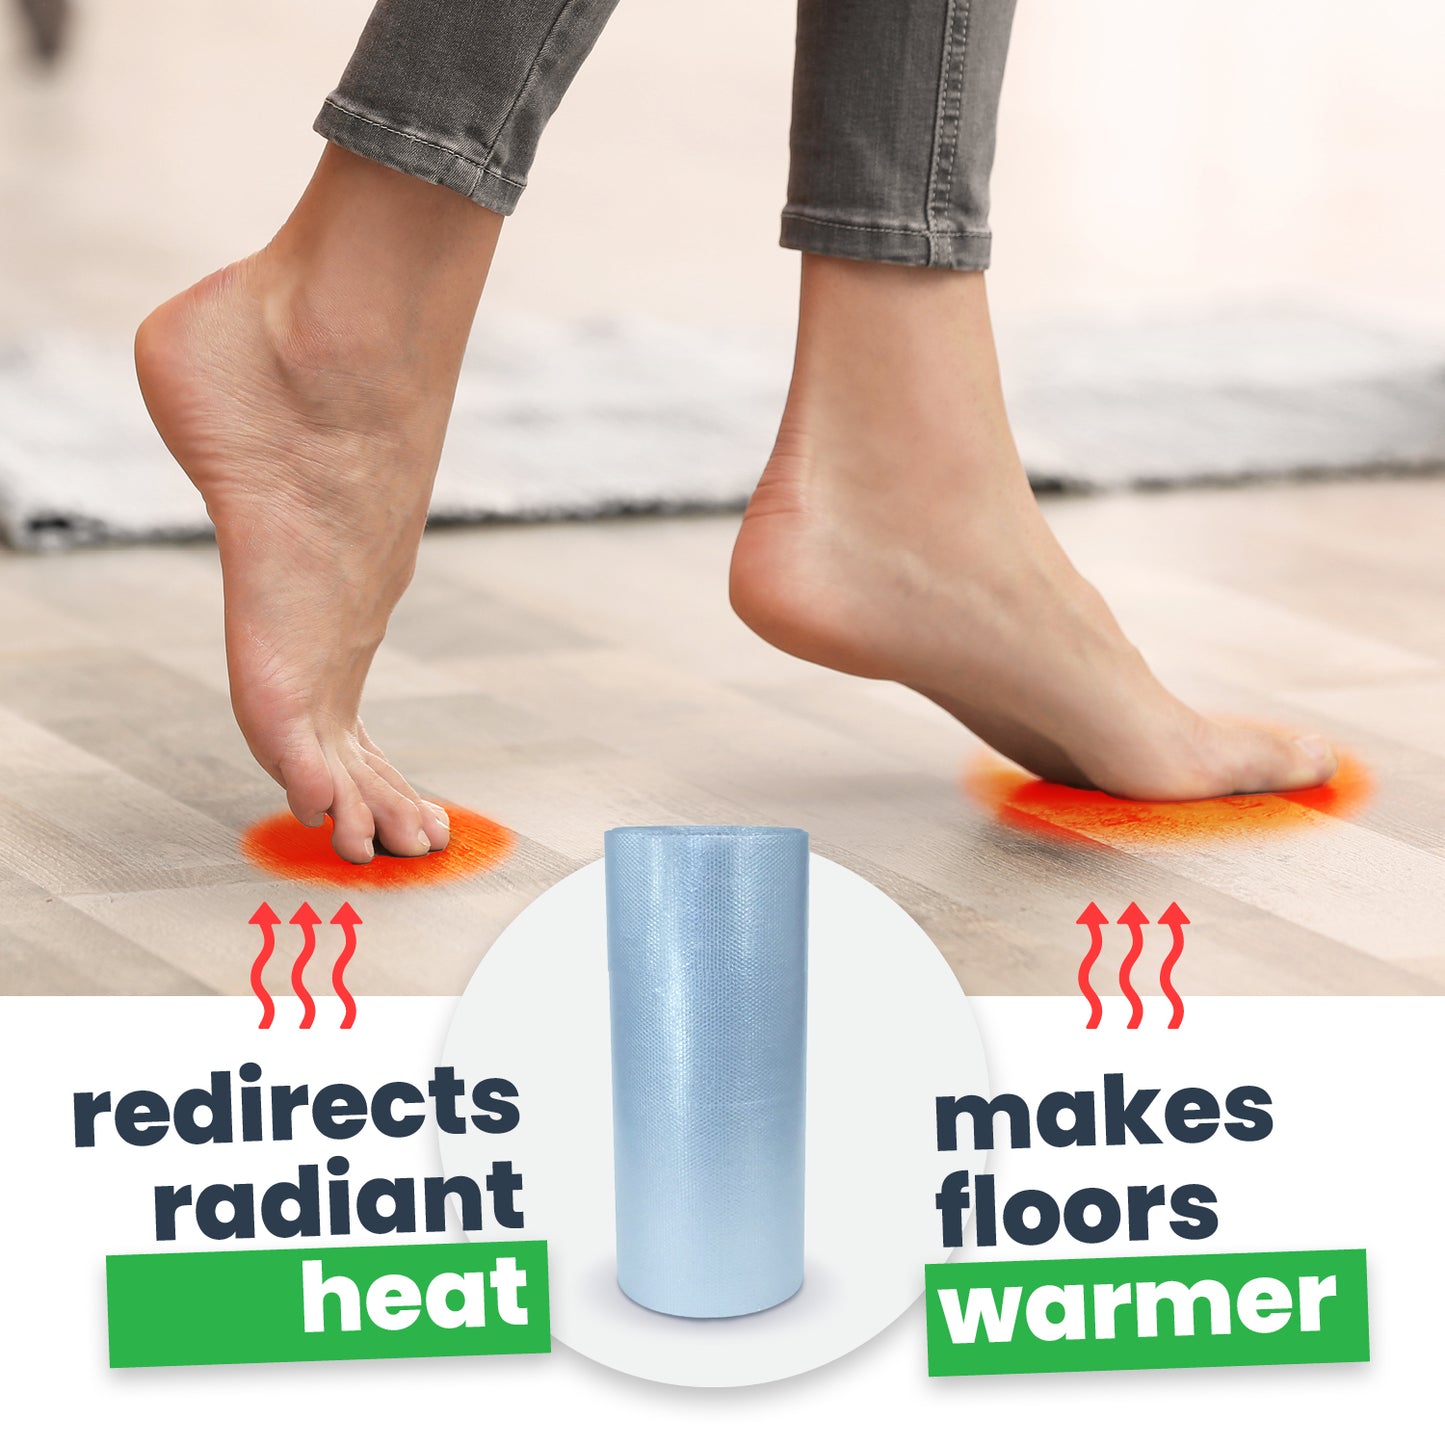 Reflects radiant heat, makes floors warmer